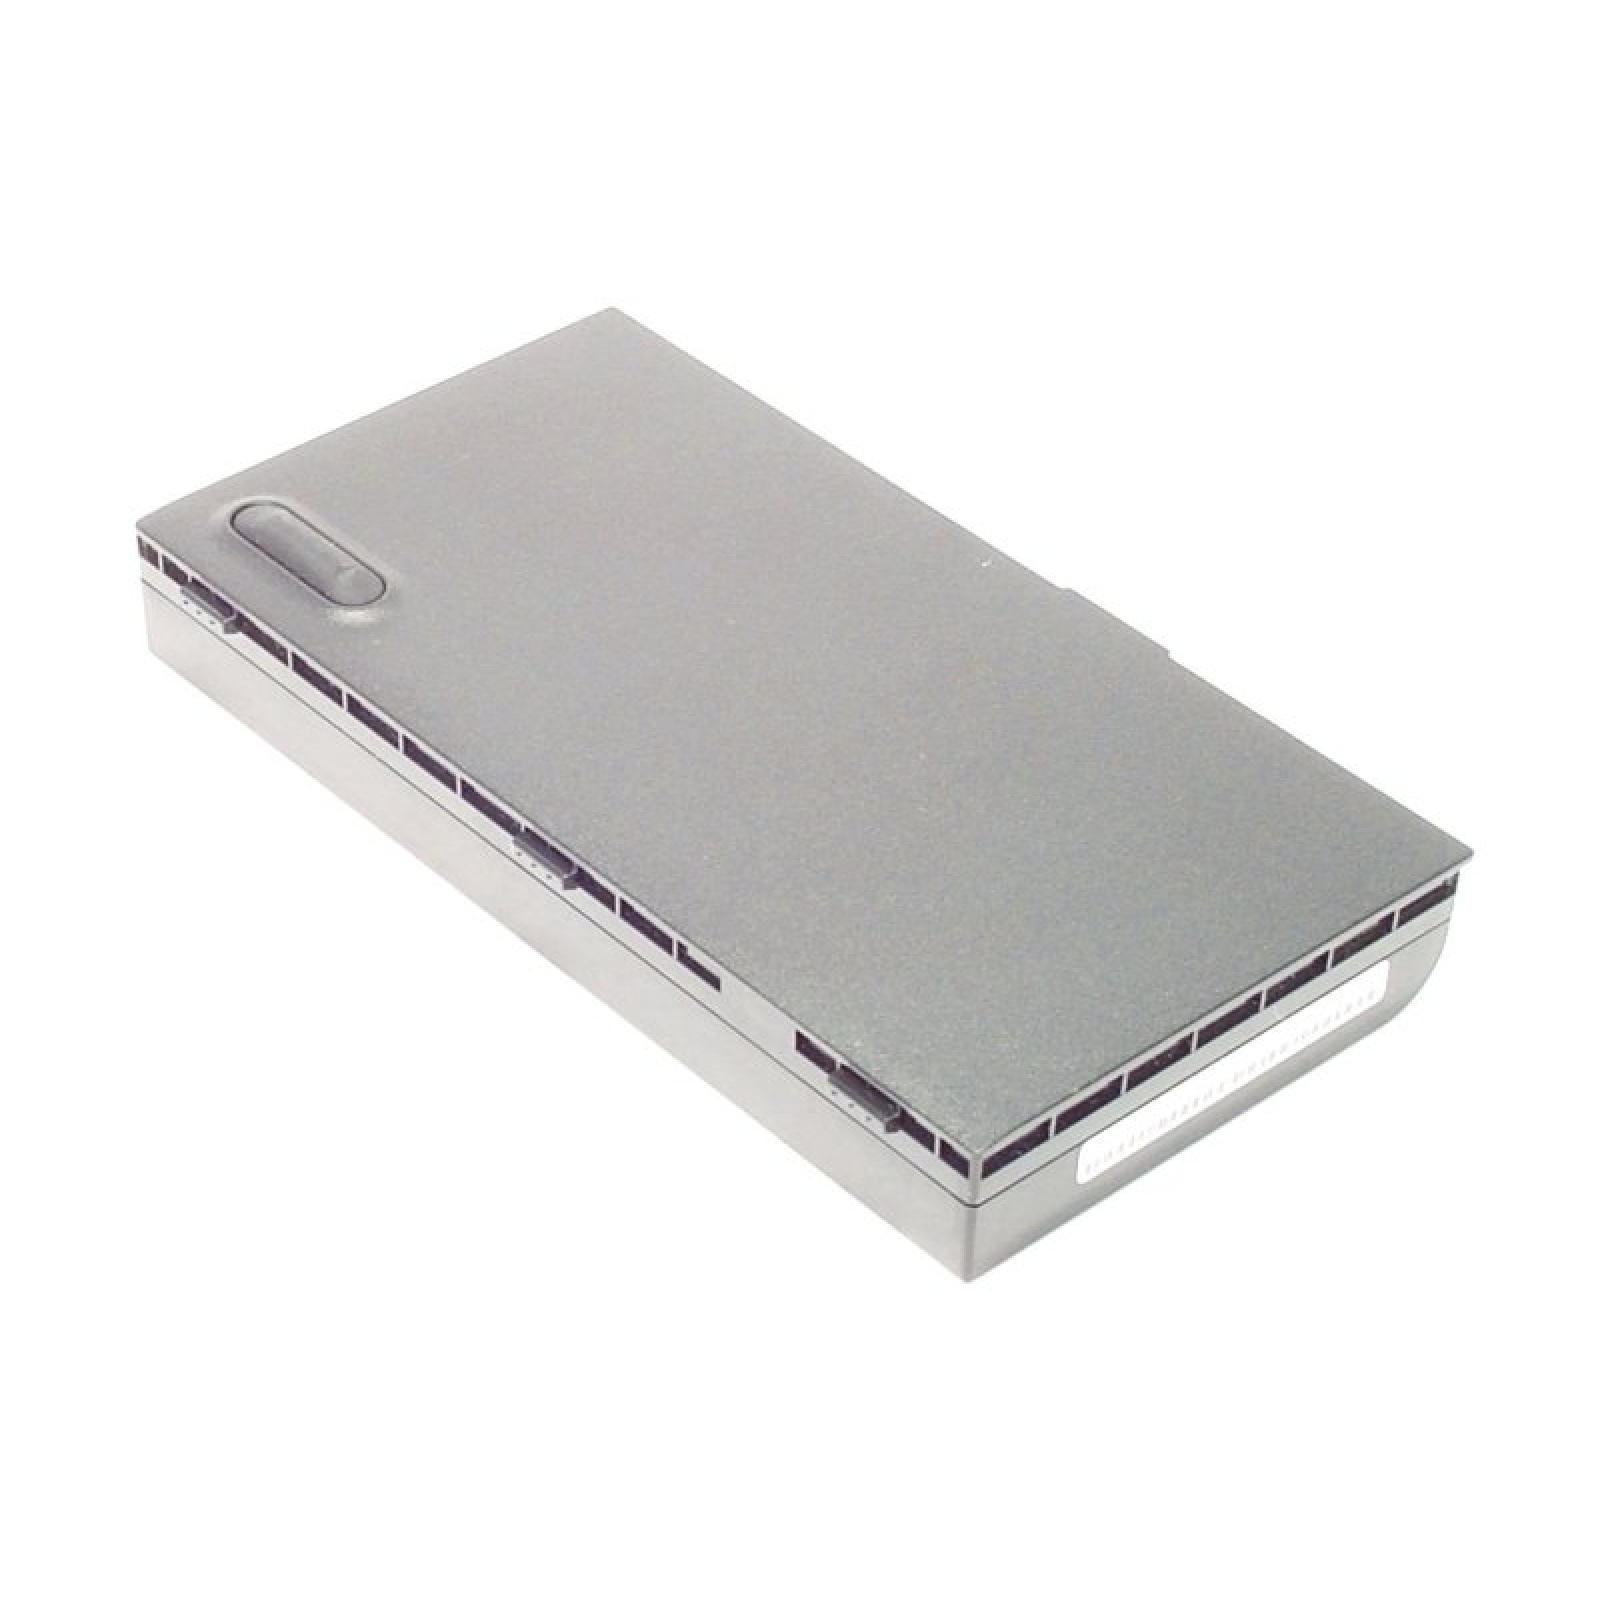 Lithium-Ionen Akku für 14.8 14.8V, (LiIon) BENQ S57 JoyBook Volt, mAh LiIon, MTXTEC 4400mAh Notebook-Akku, 4400